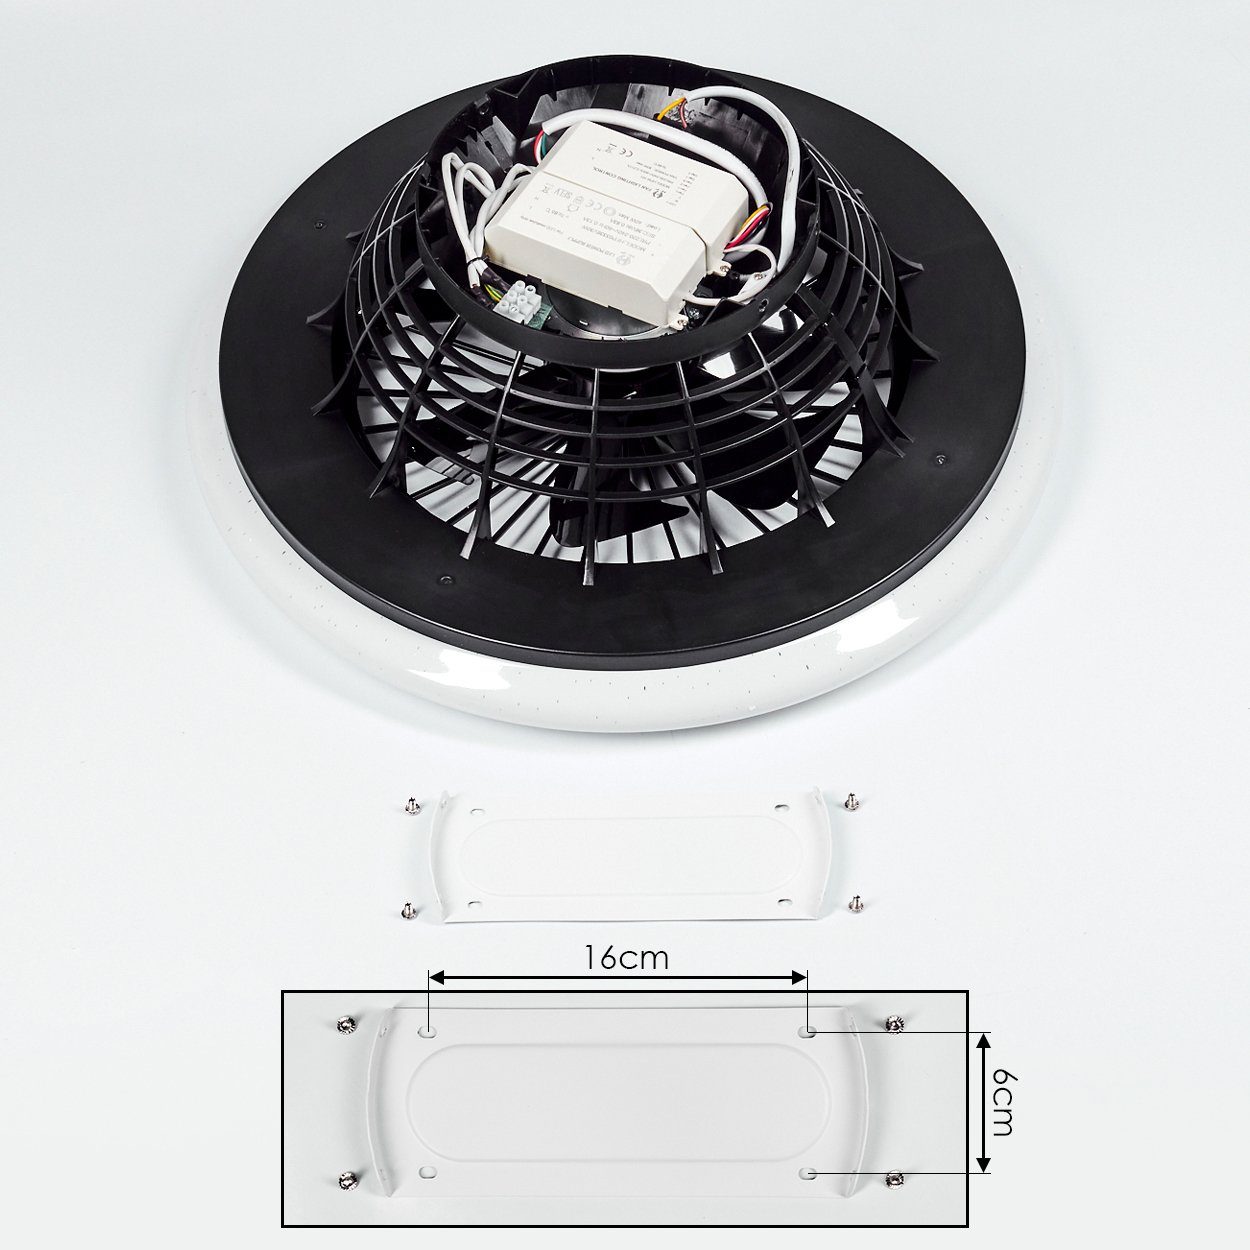 Metall, Kunststoff, aus »Concas« Weiß hofstein Deckenlampe, Ventilator Schwarz, Tischturmventilator